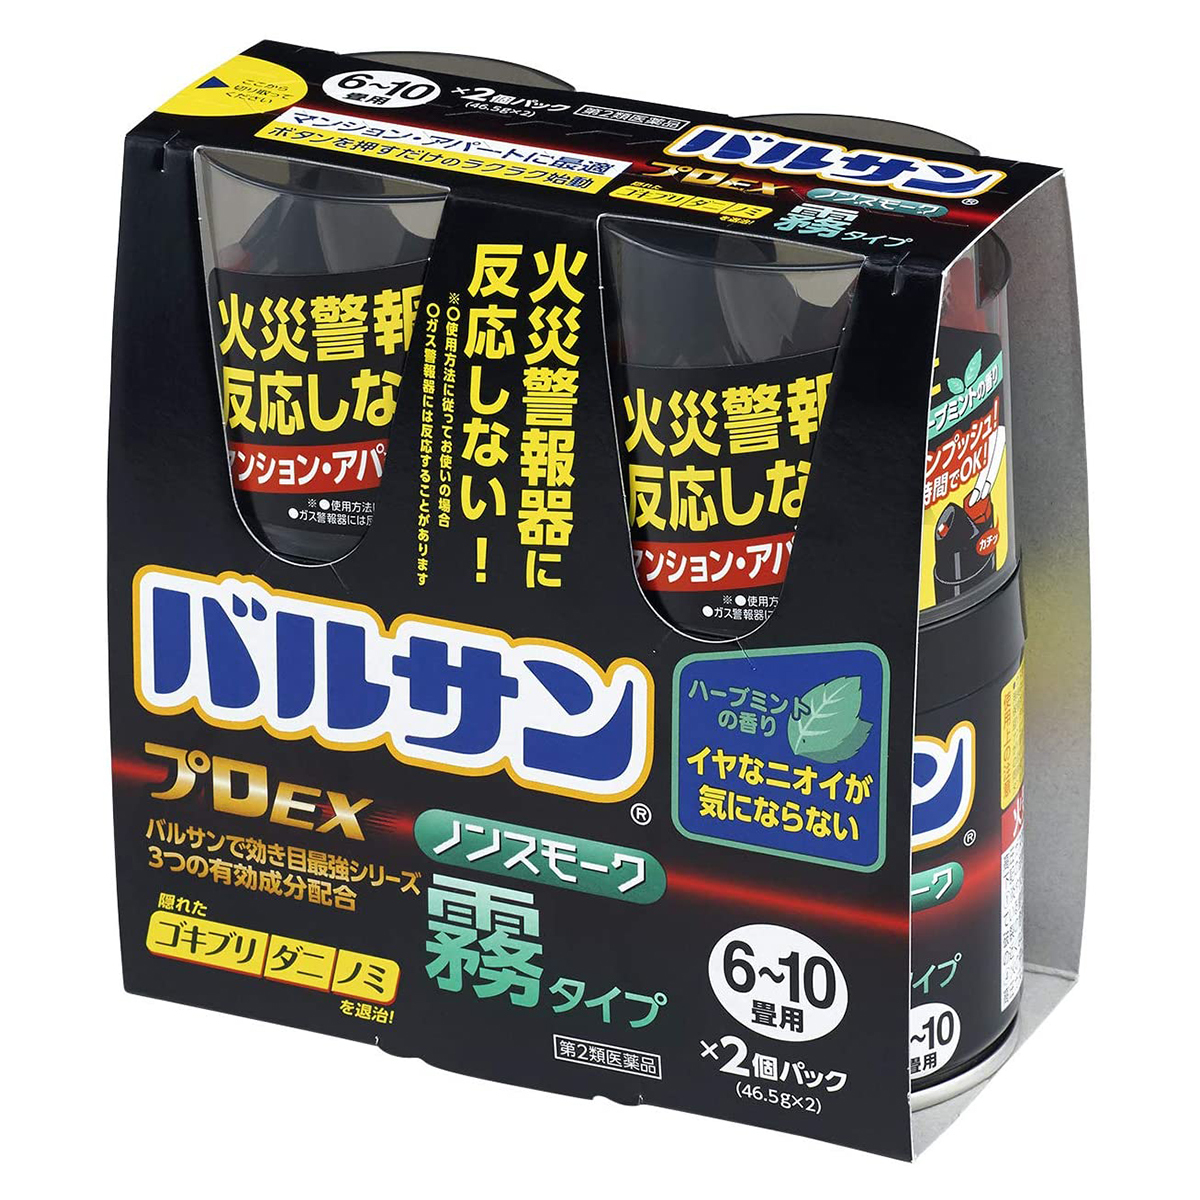 [ no. 2 kind pharmaceutical preparation ] Balsa n Pro EX non smoked fog type 46.5g×2 piece set 6~10 tatami for 